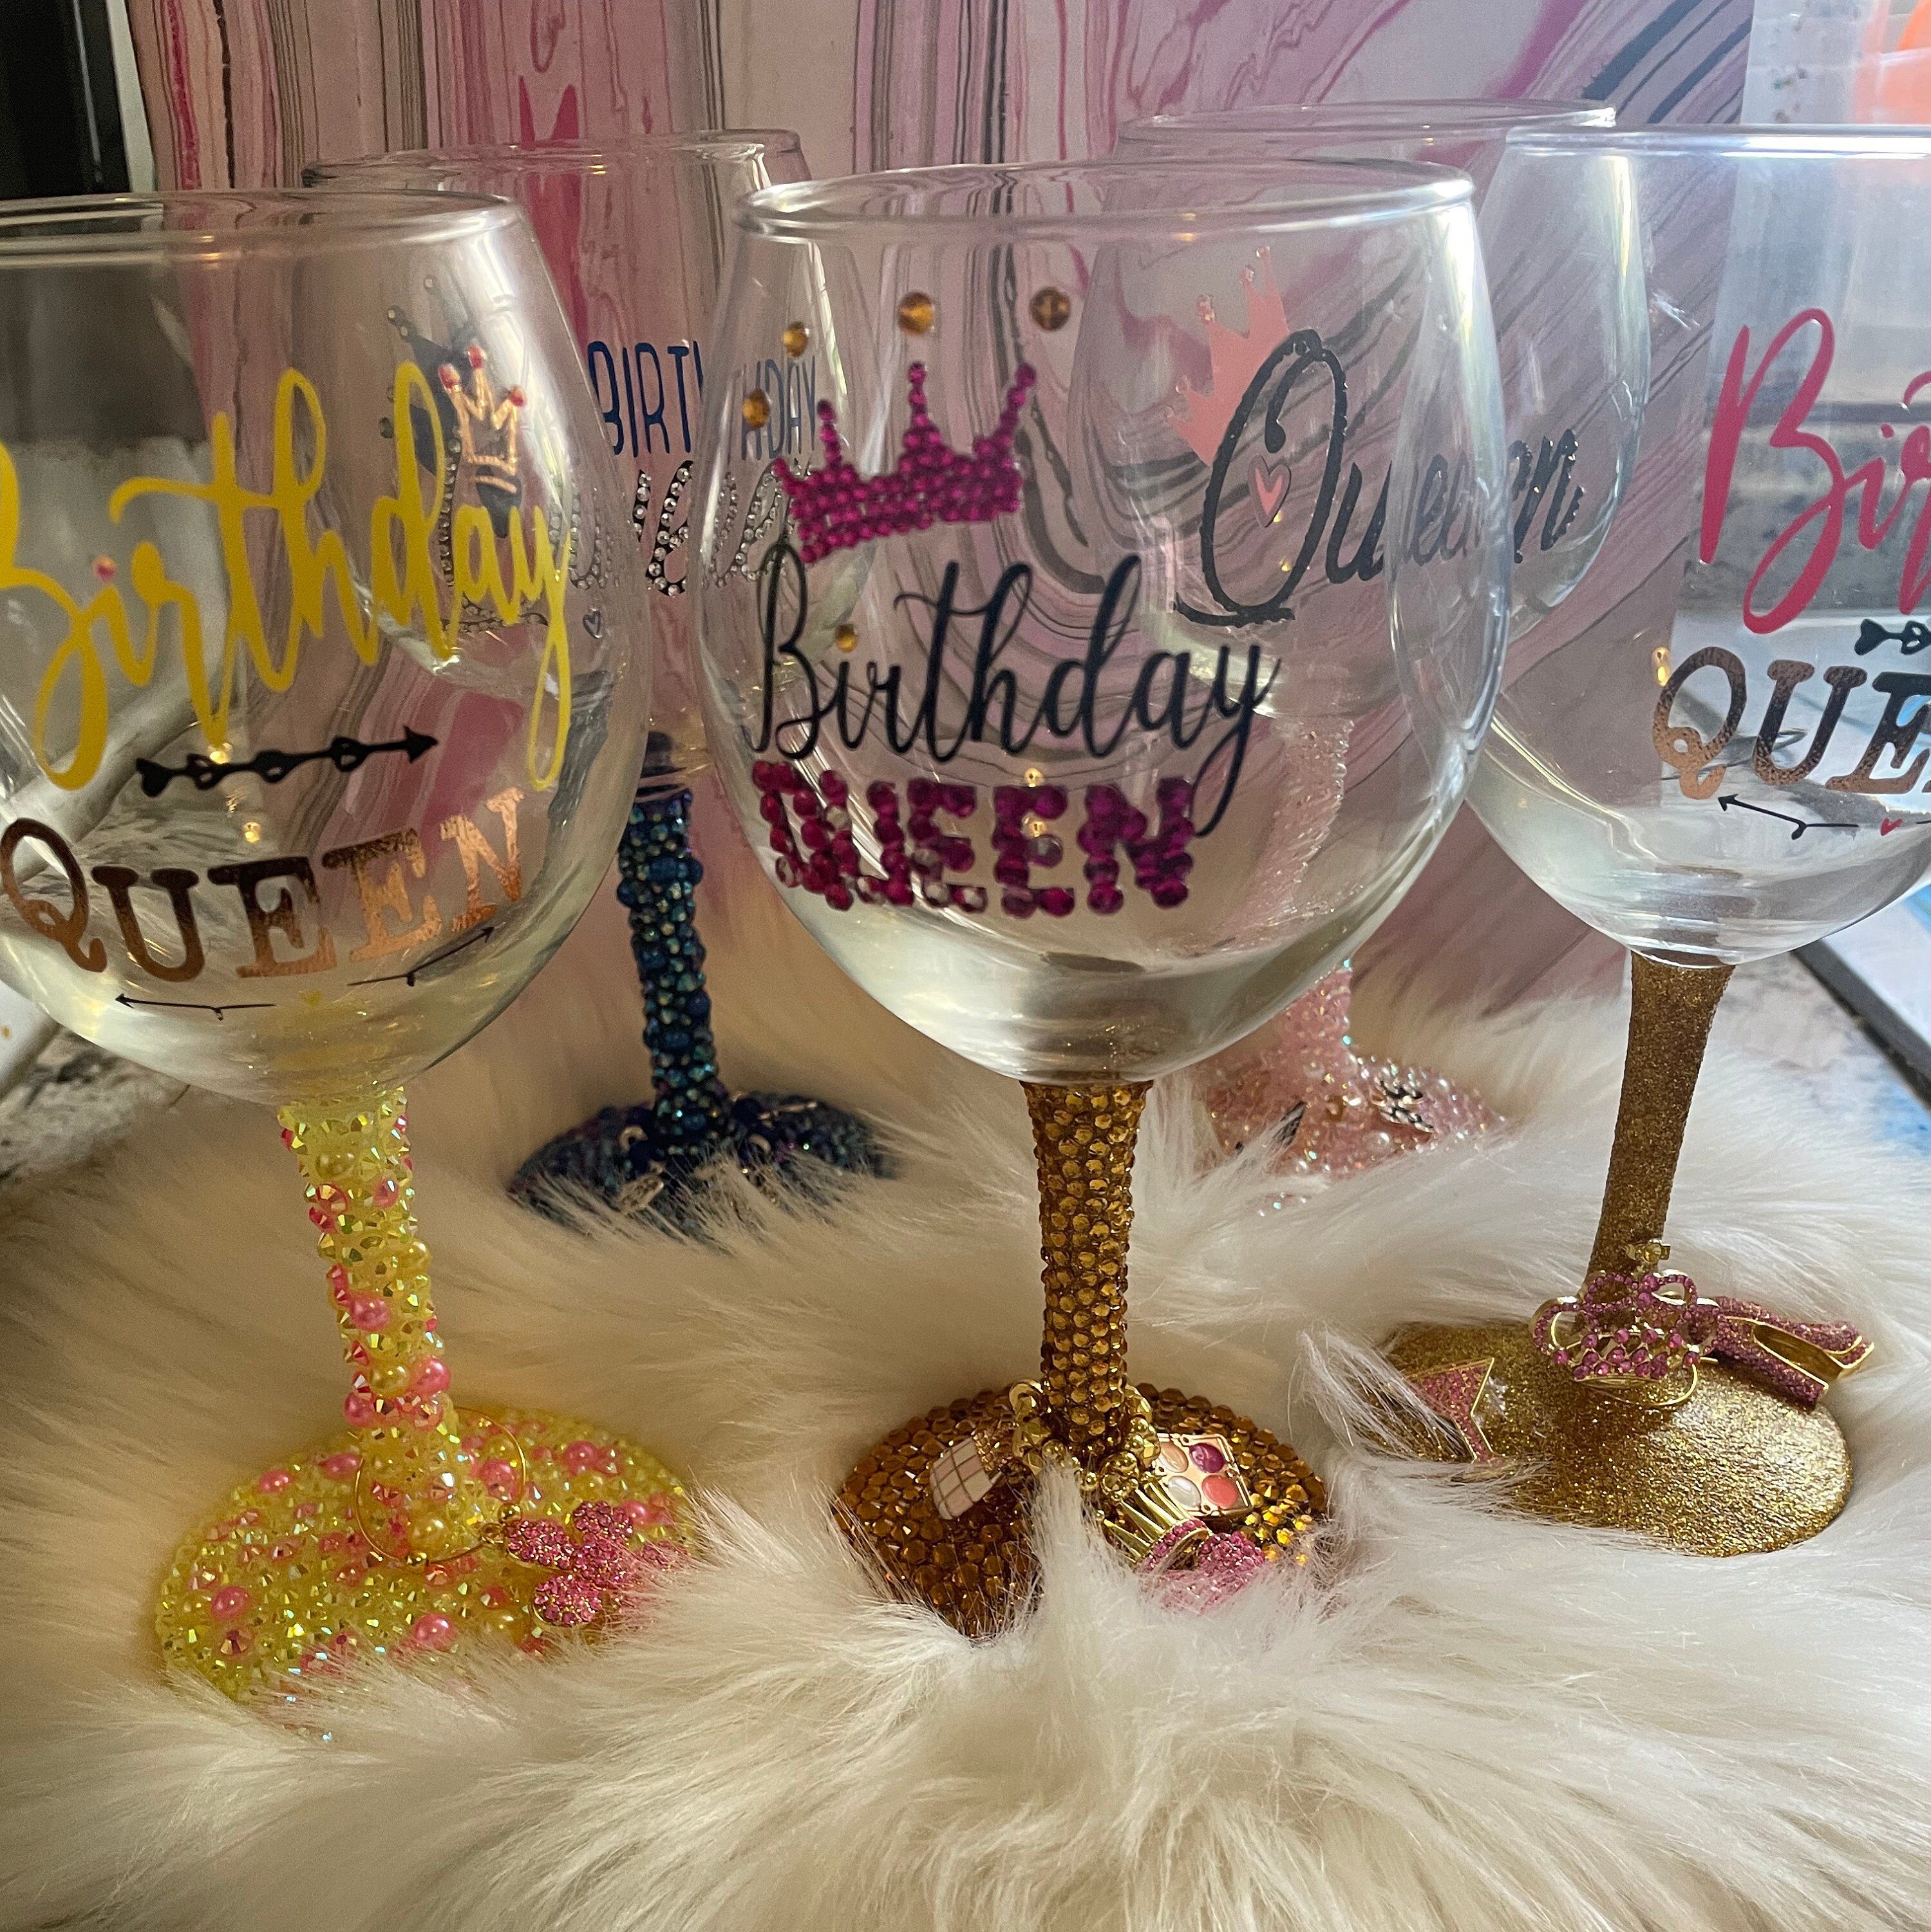 Diva white glitter wine glass & Boss LADY PINK/ GRAY SWIRL WINE